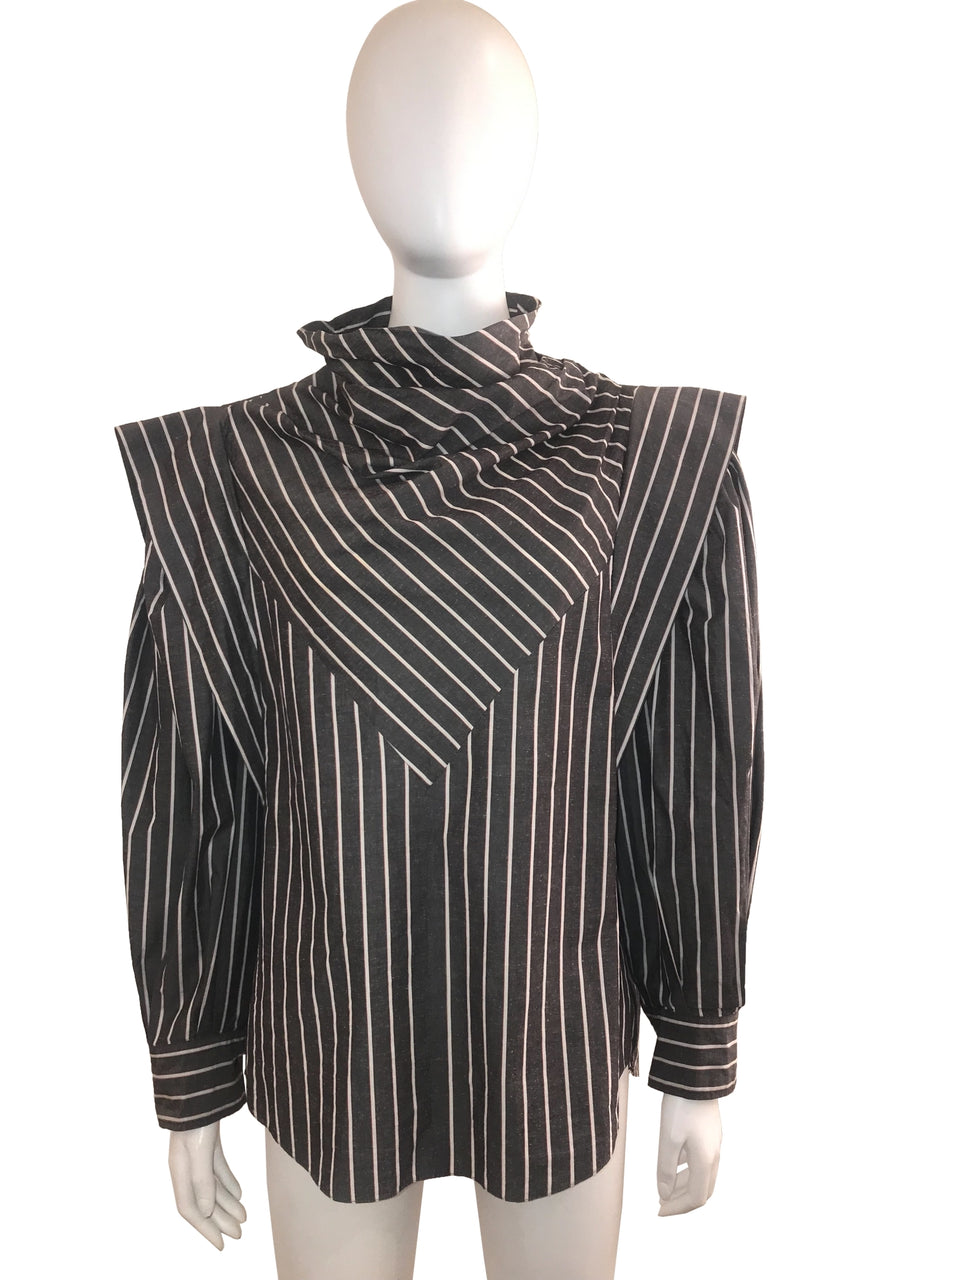 Striped Shirt with Peak Shoulder